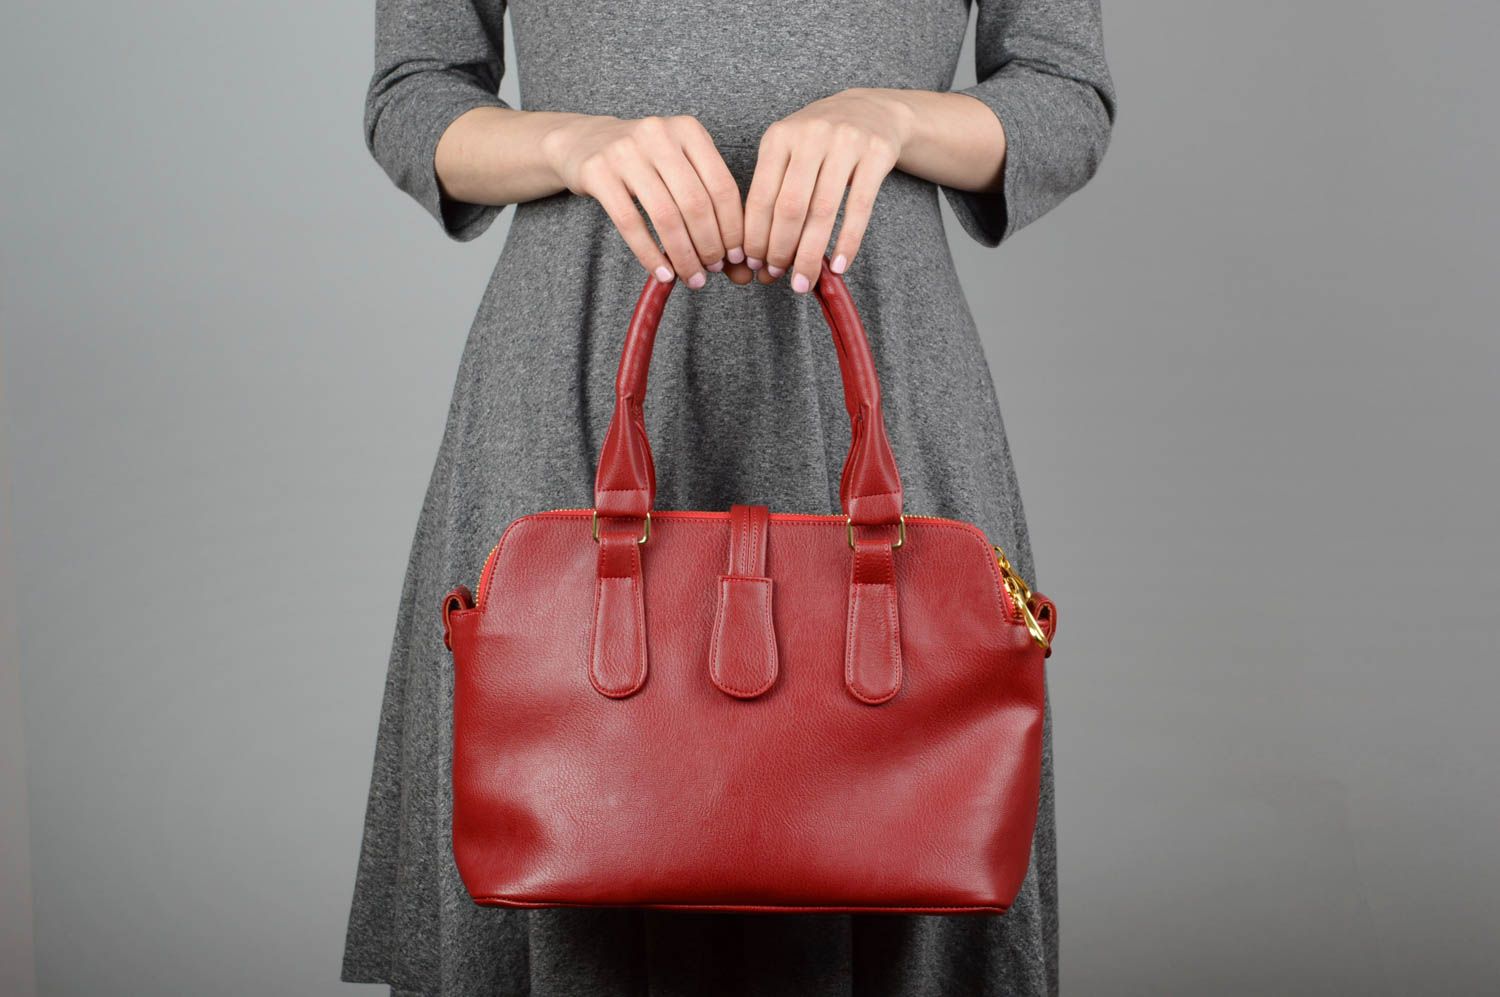 Handmade leatherette shoulder bag fashion accessories stylish bordeaux bag photo 1